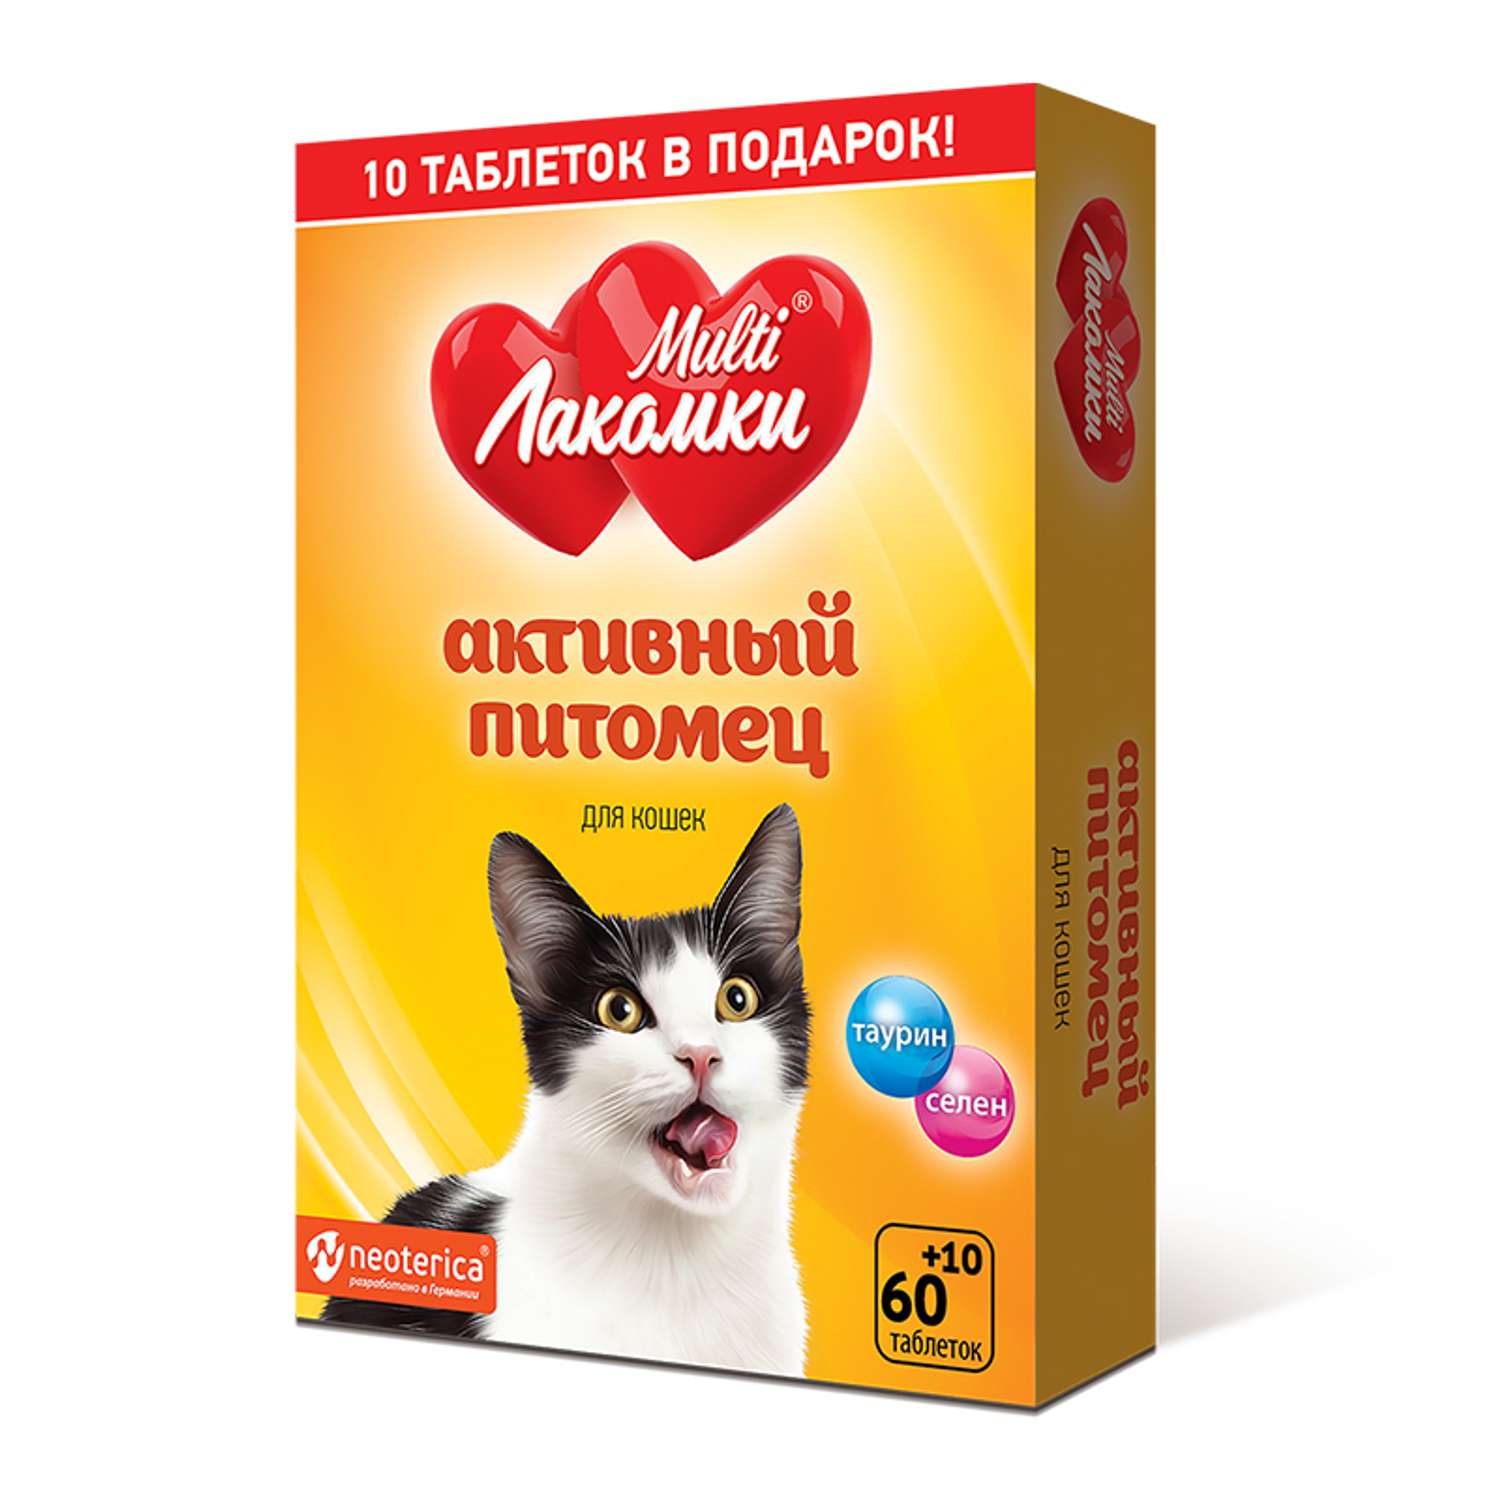 Лакомство для кошек MultiЛакомки Активный питомец витаминизированное 70таблеток - фото 1